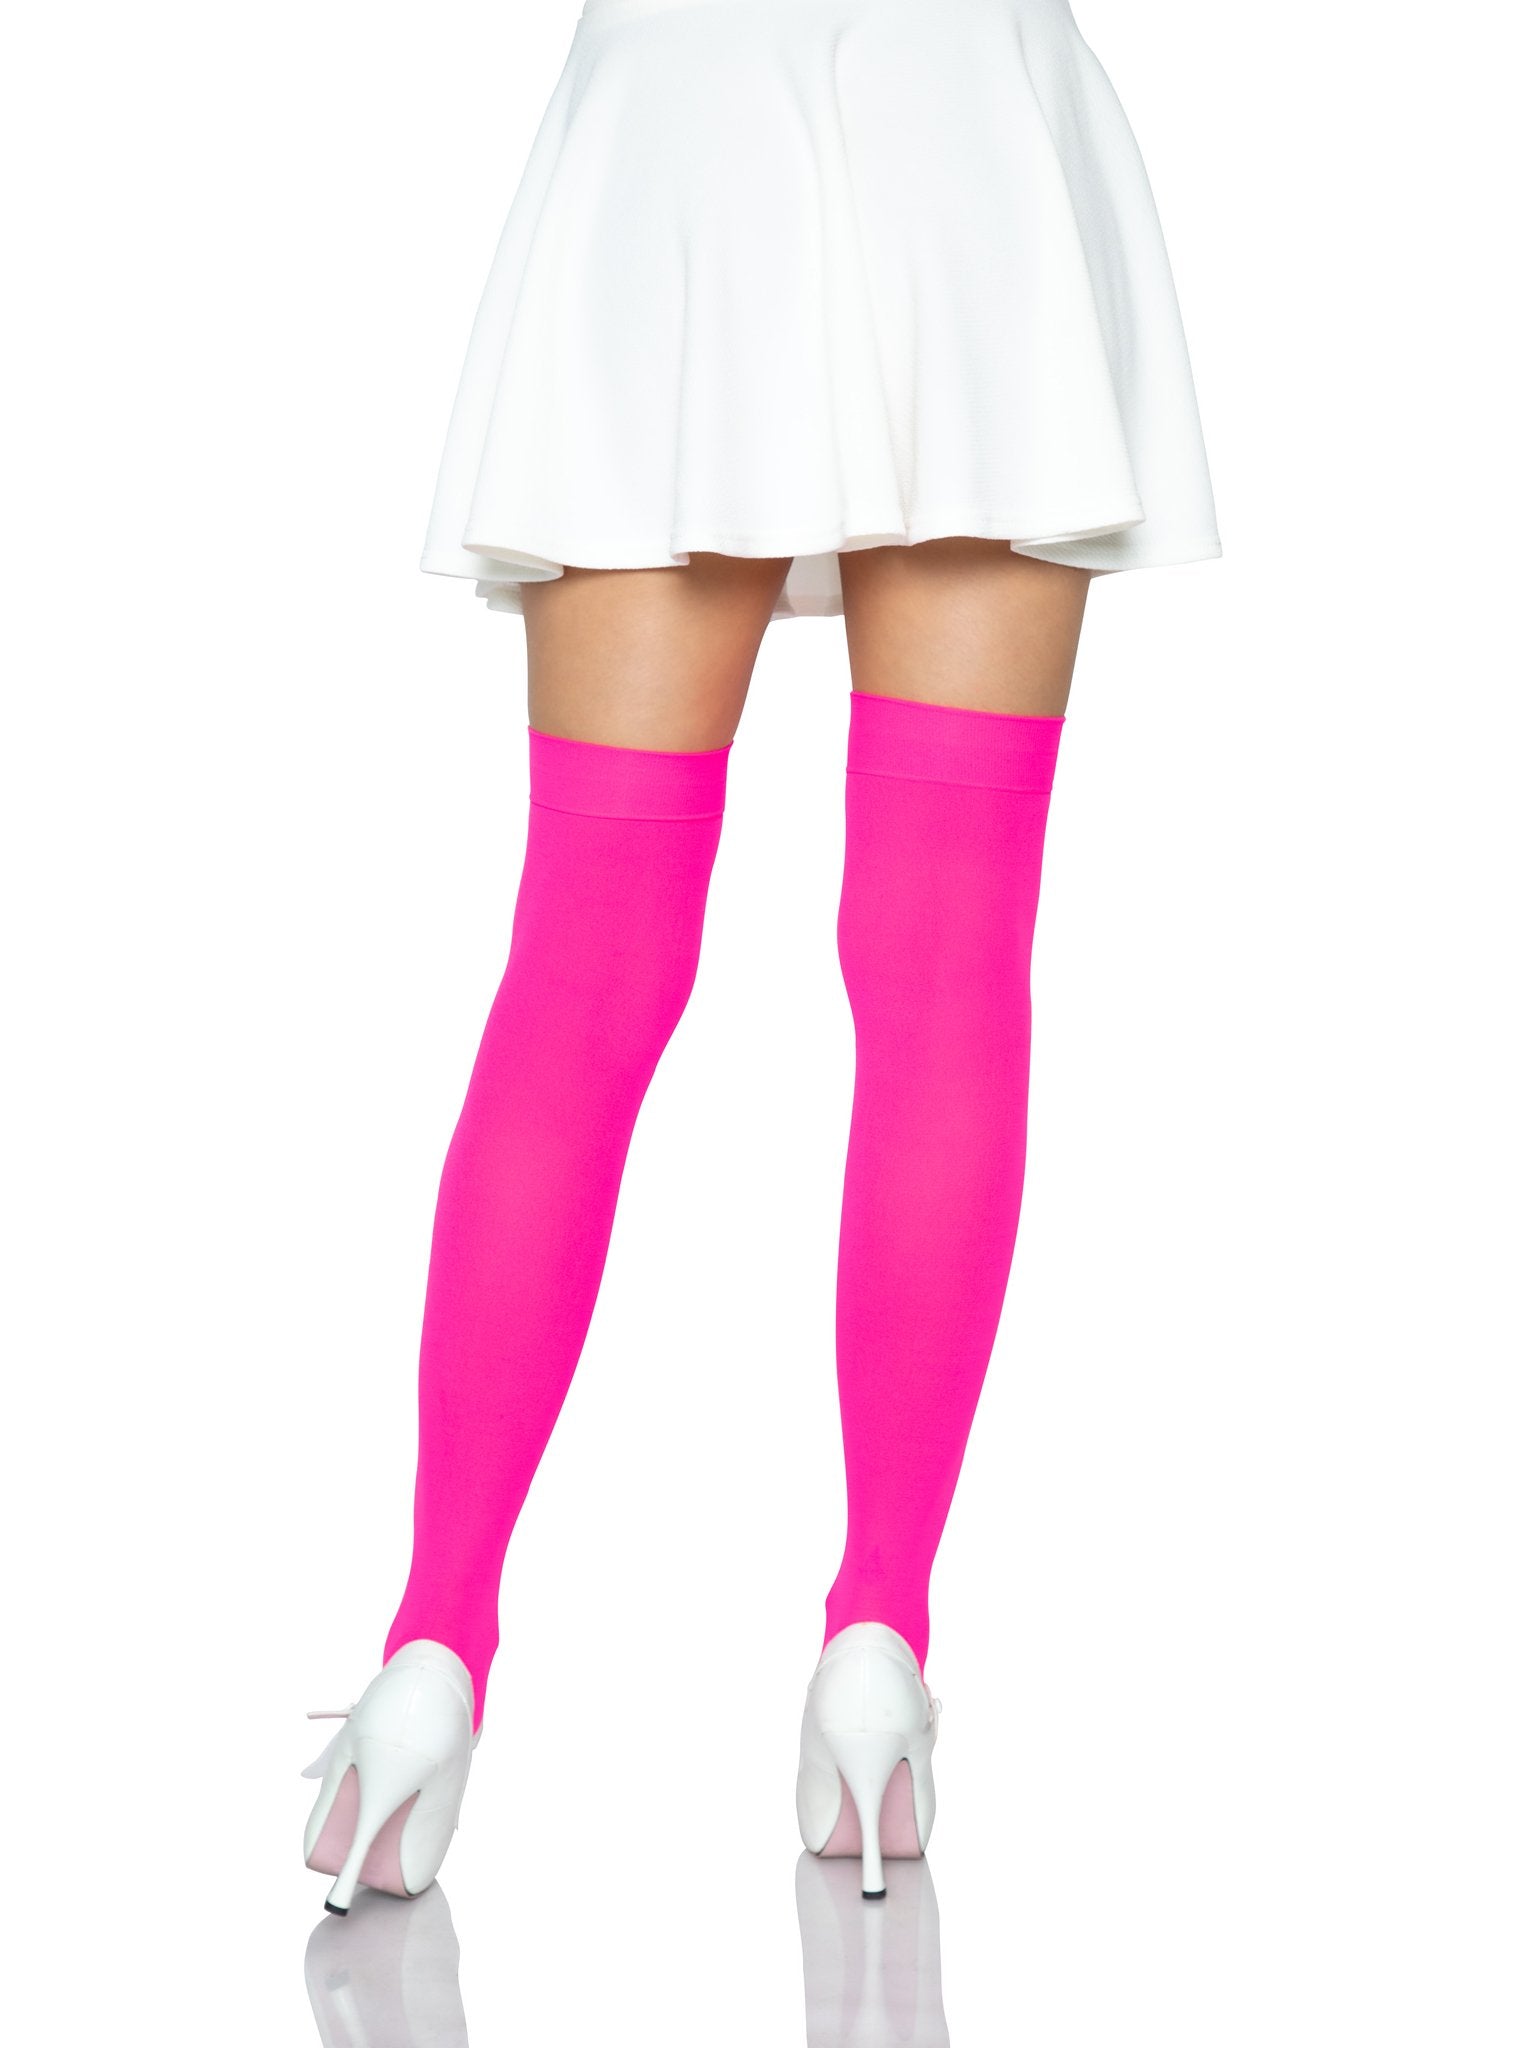 Ciorapi verzi femei, dres roz neon, S-L